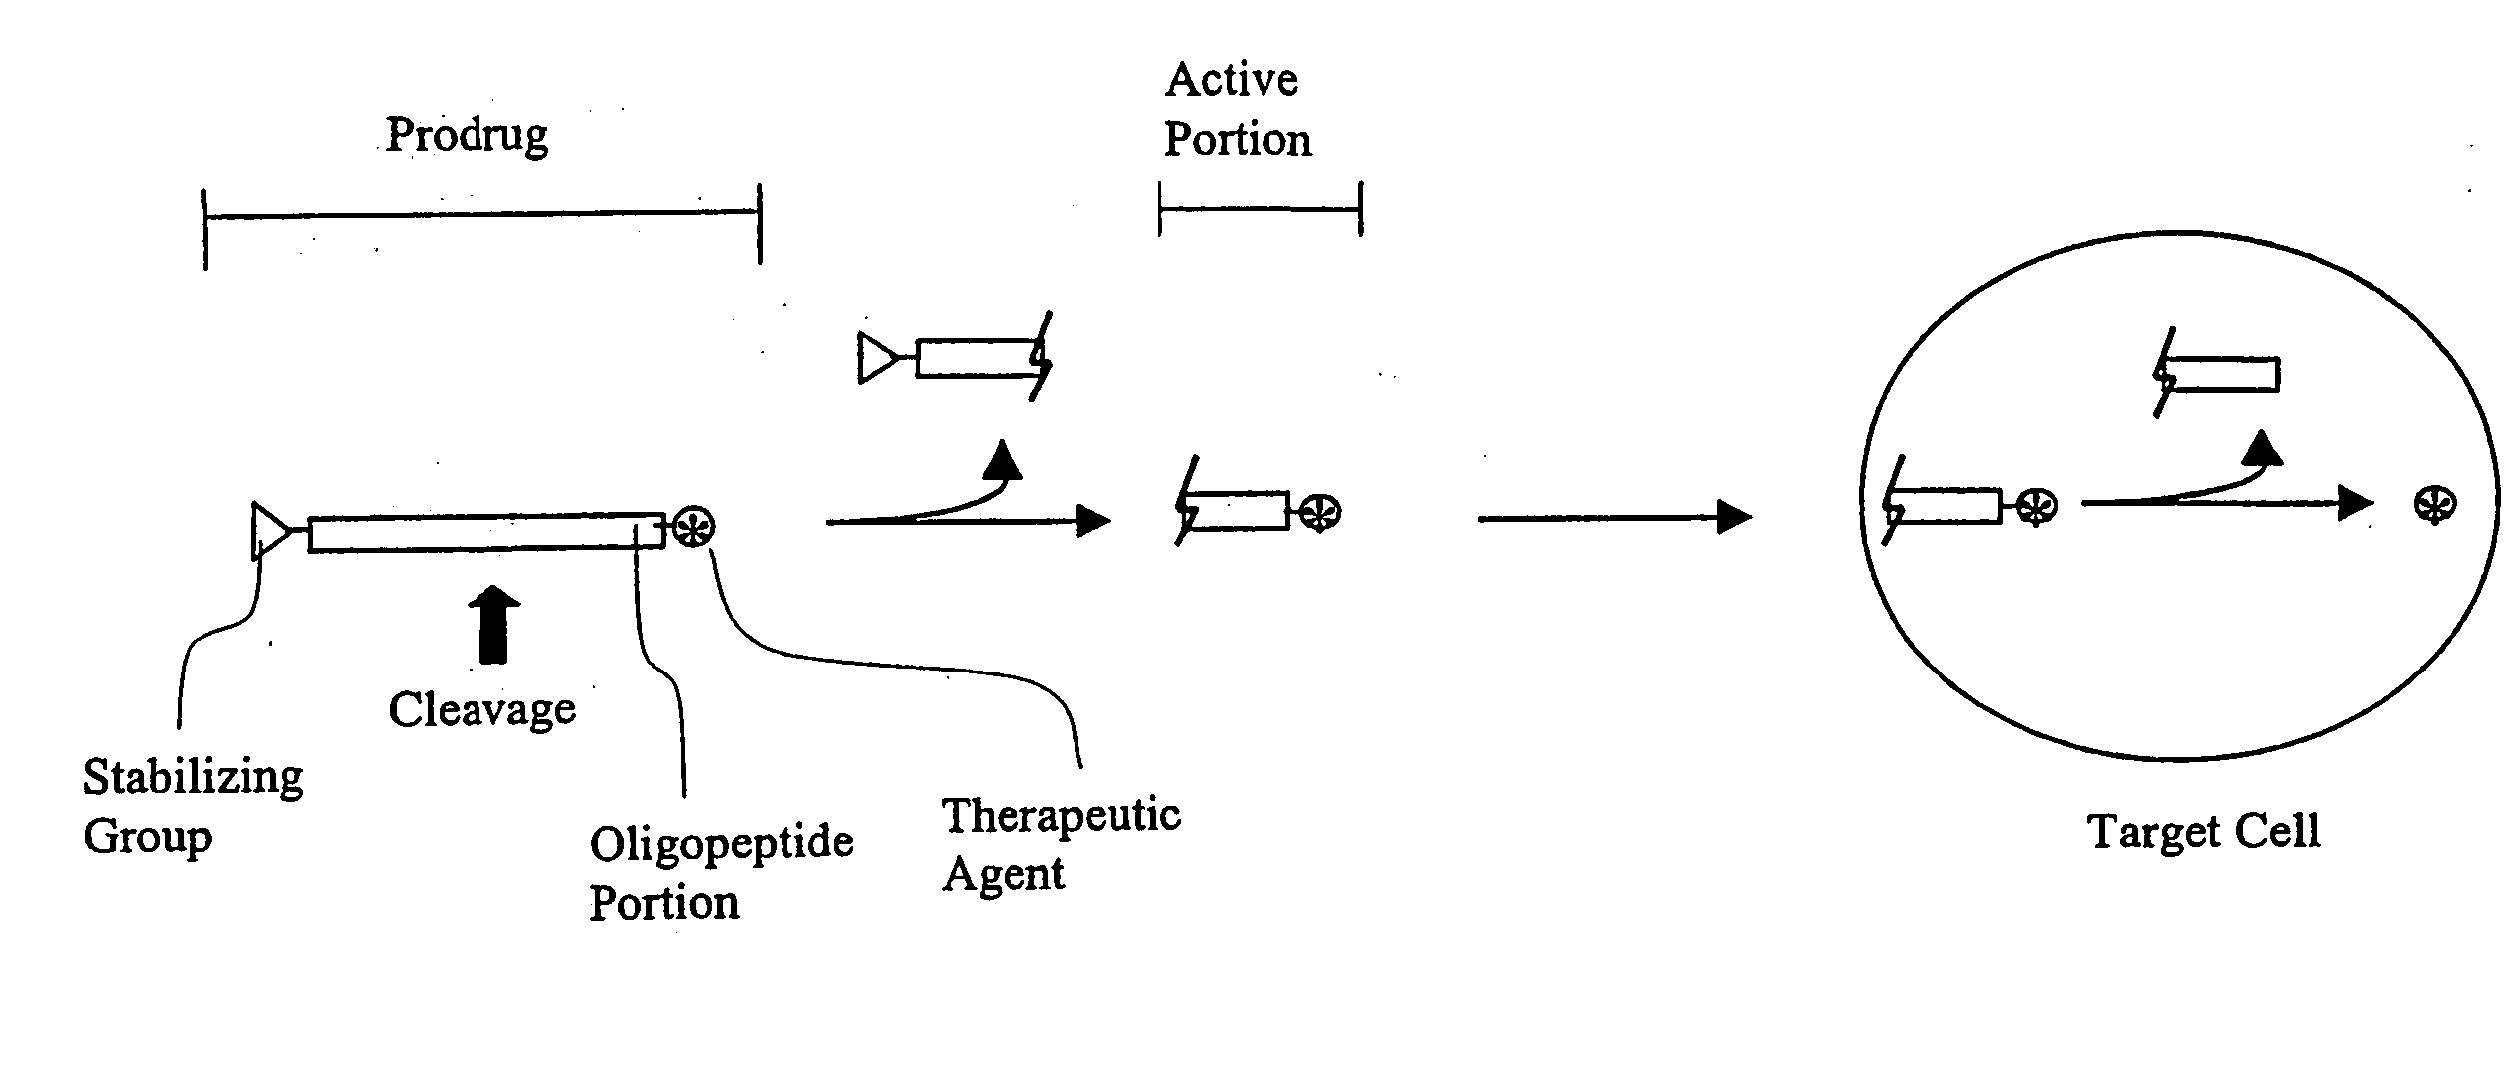 Tripeptide prodrug compounds